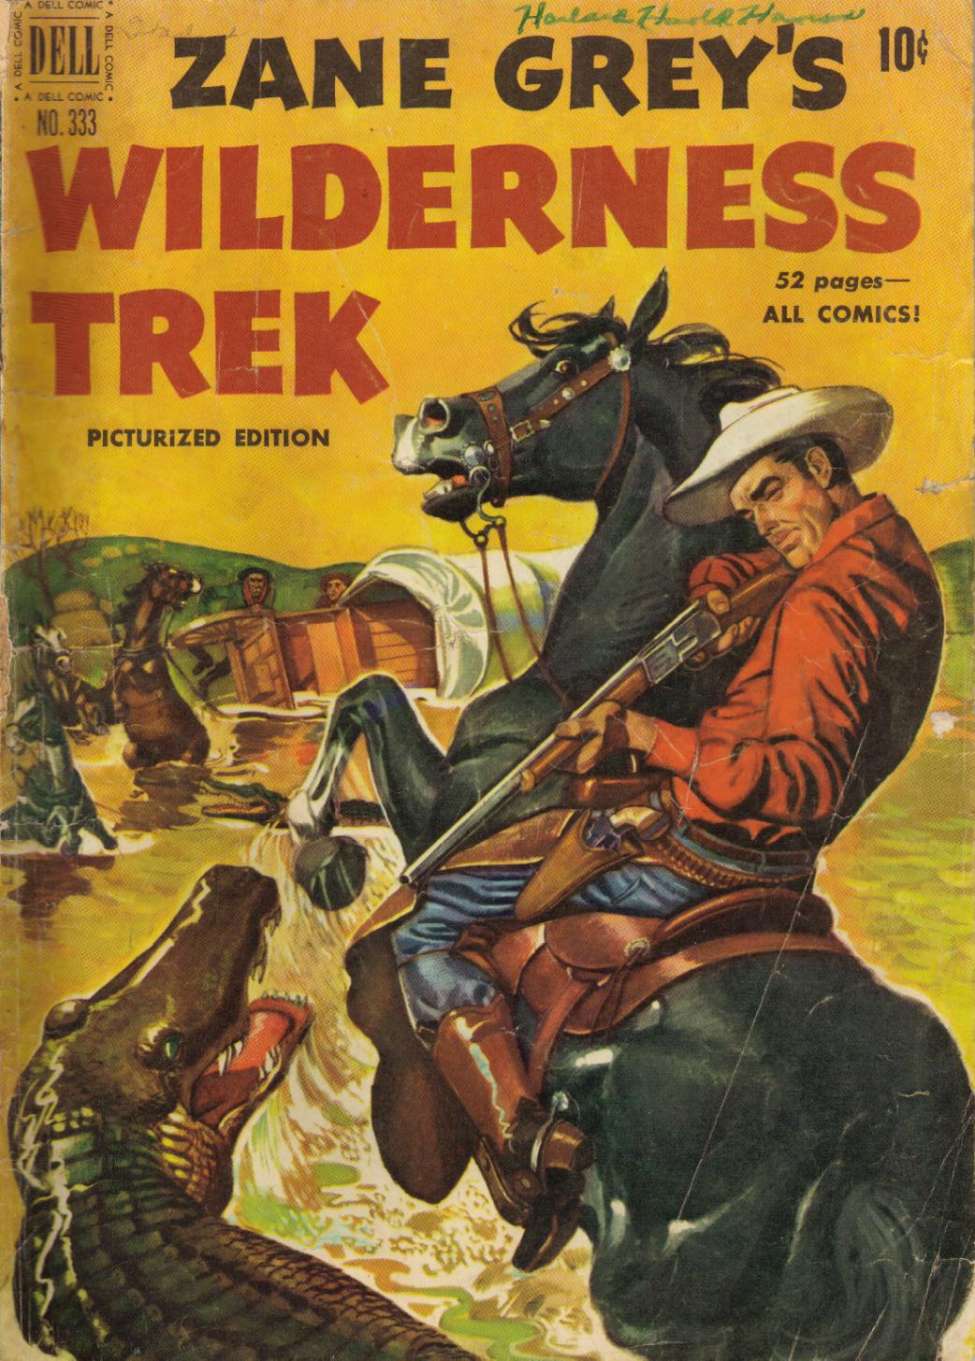 Book Cover For 0333 - Zane Grey's Wilderness Trek